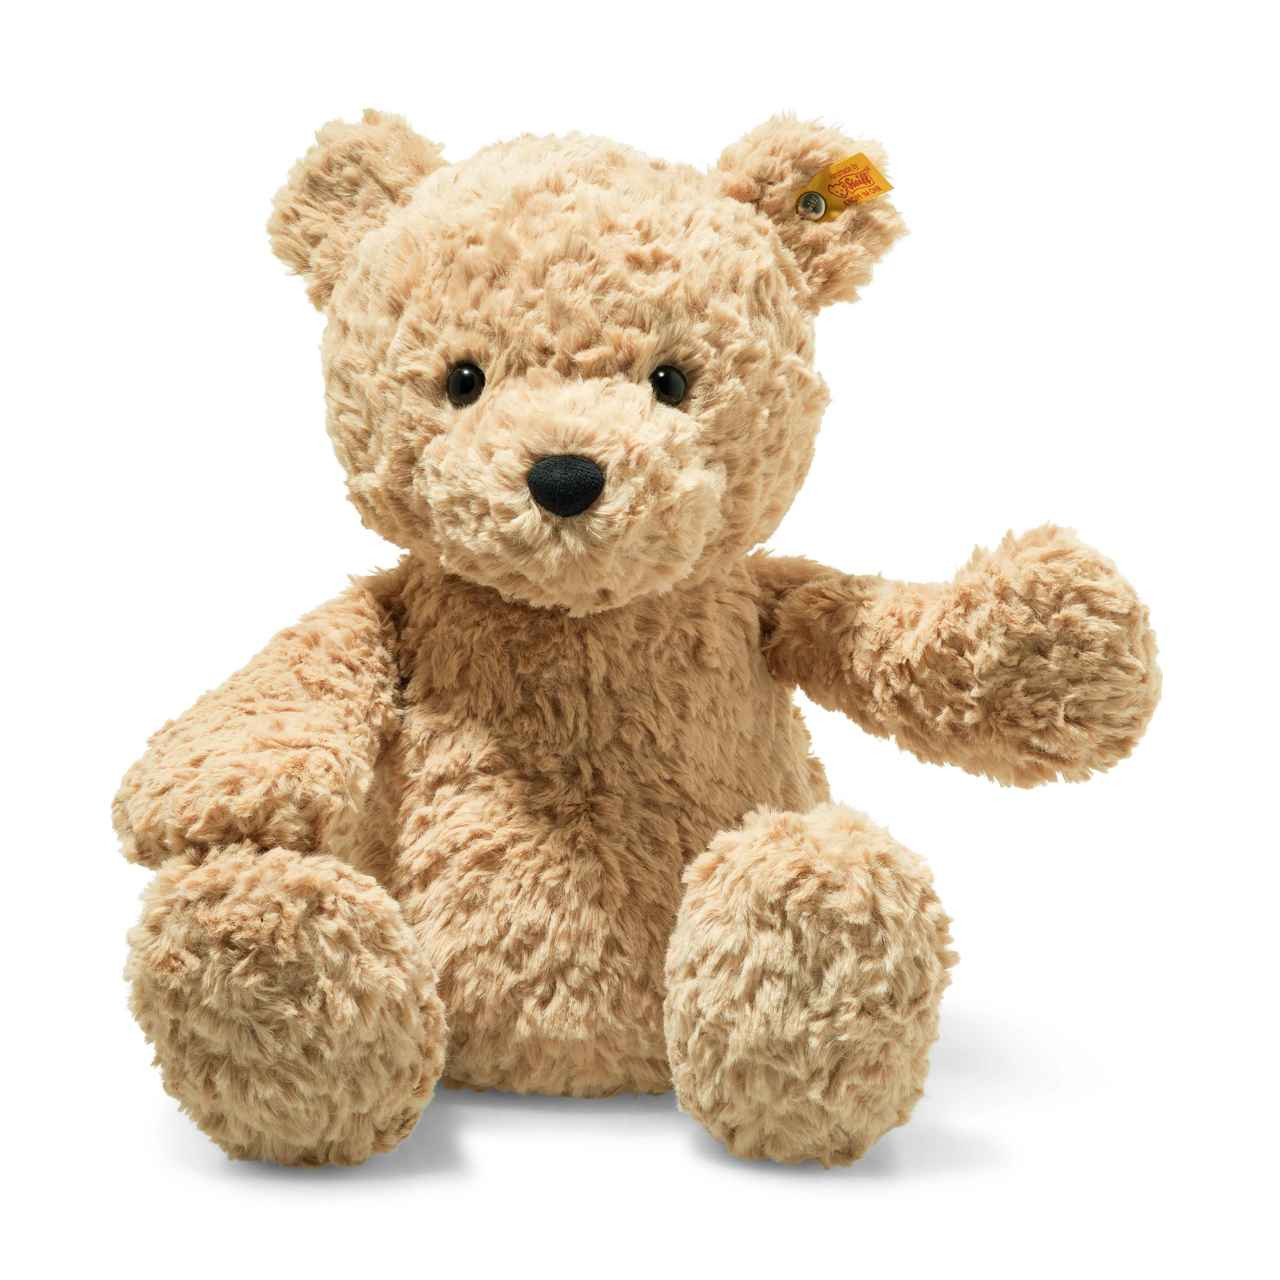 Jimmy Teddy Bear 16 inches - Steiff 